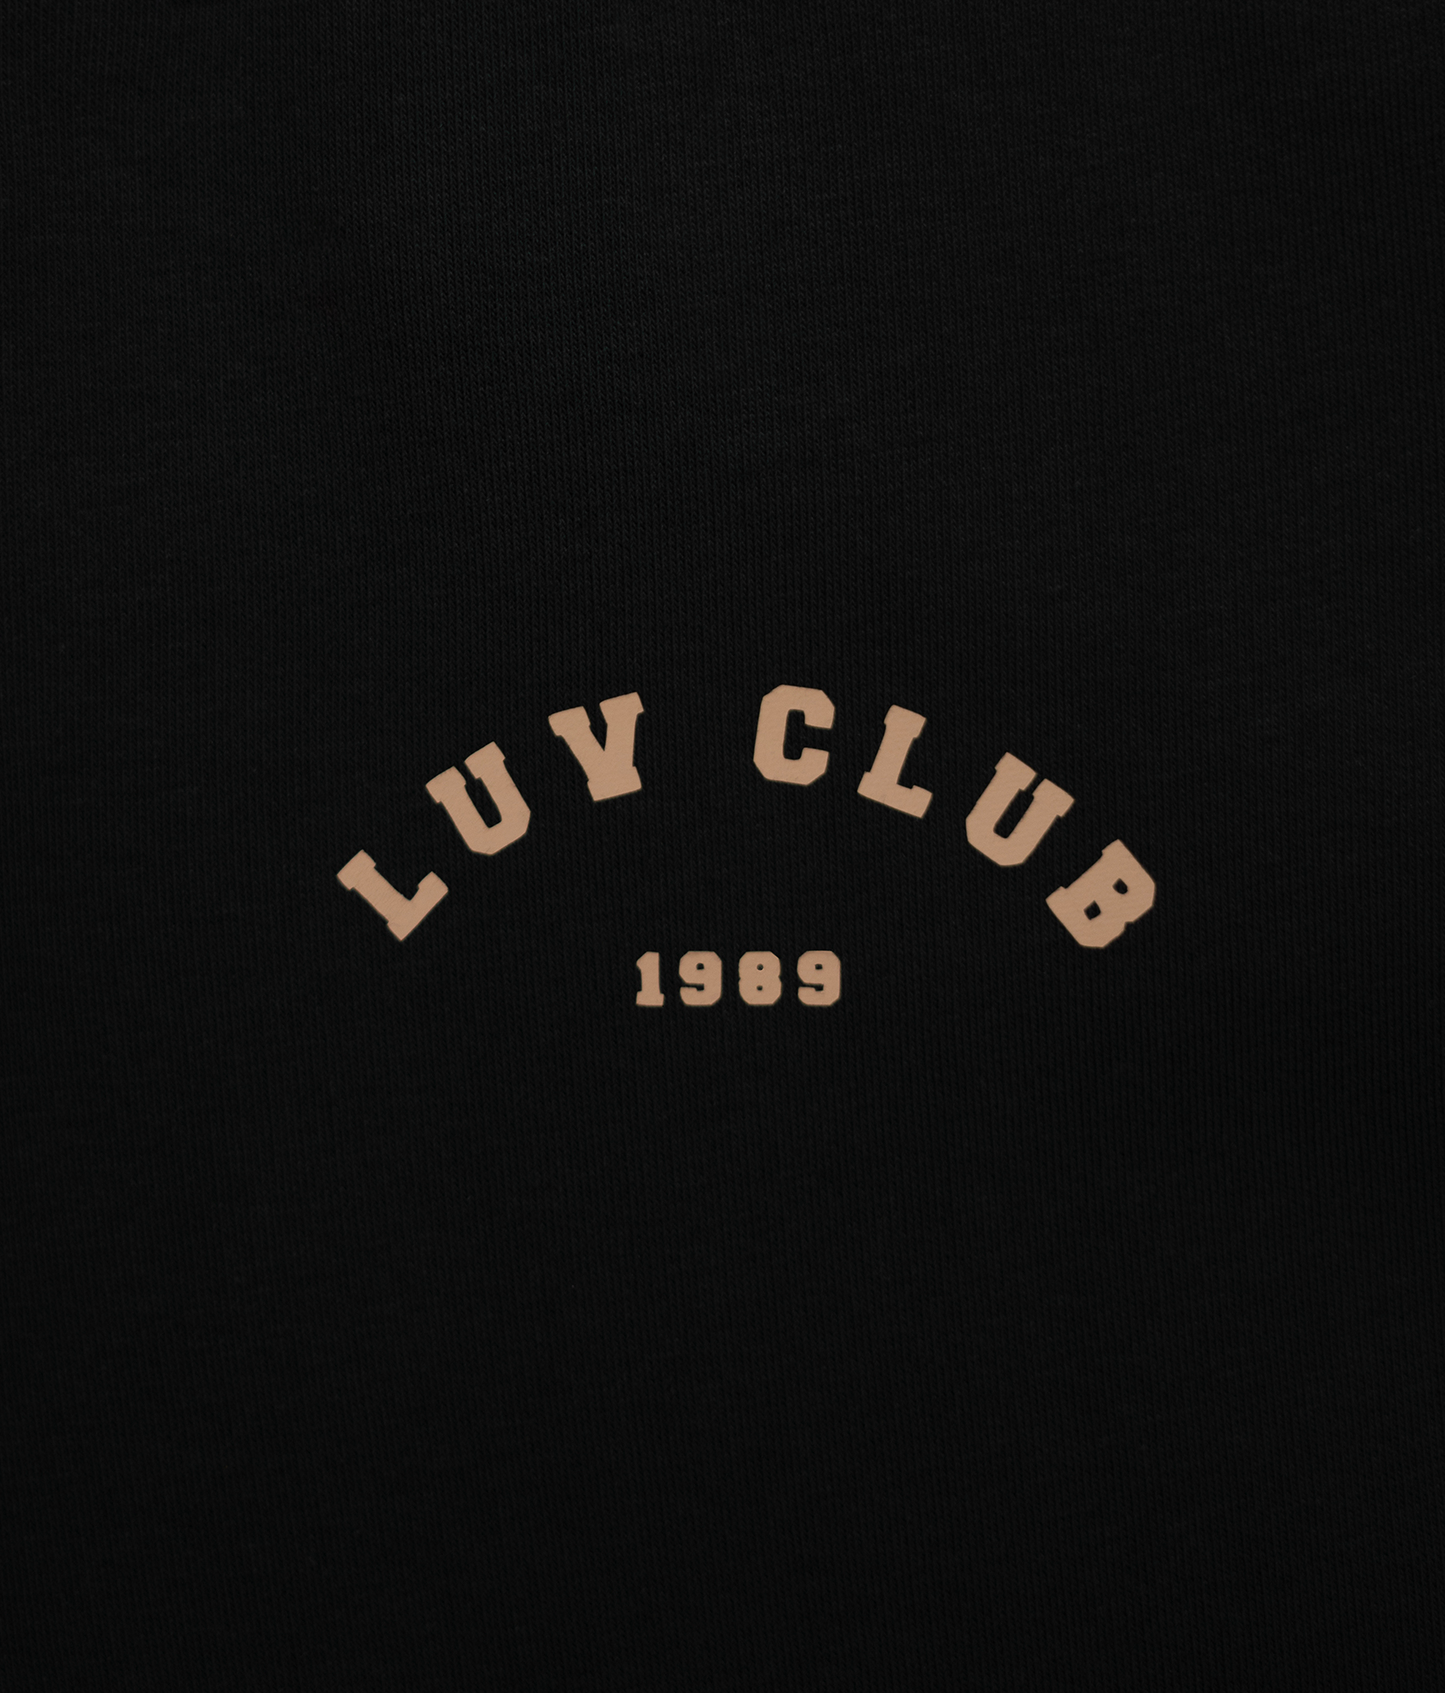 LUV CLUB 1989 SWEATPANTS (BLACK)